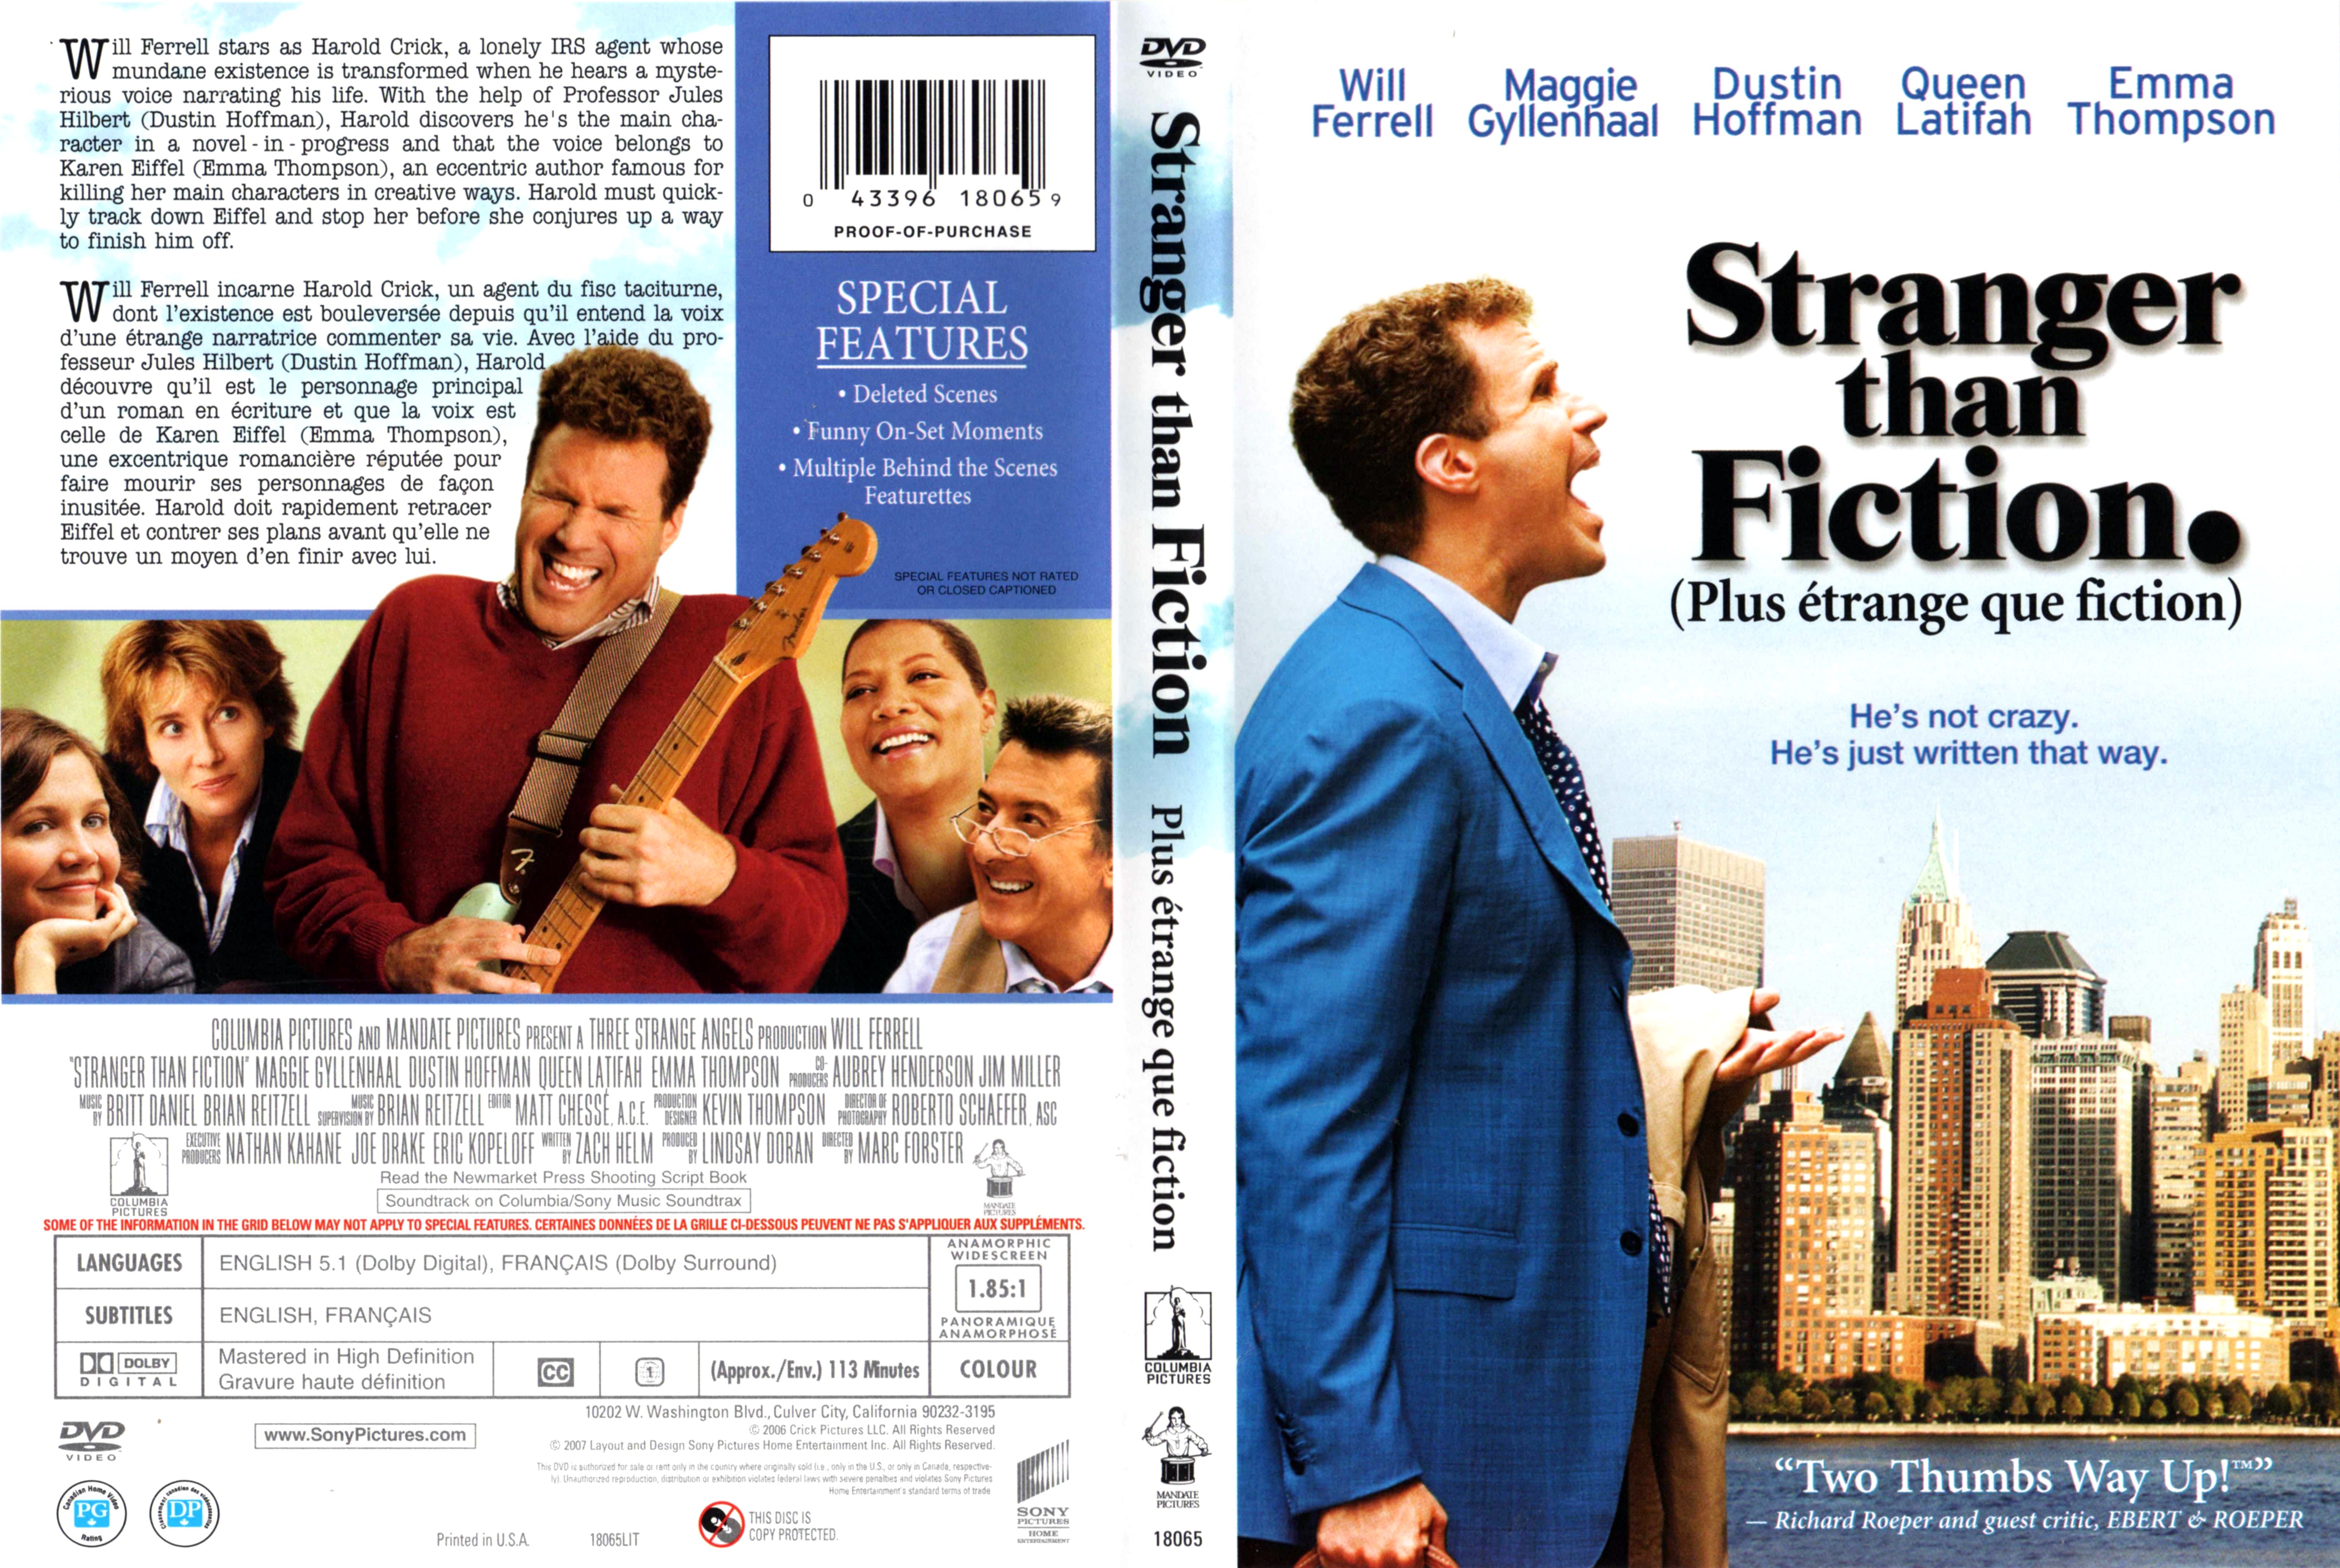 Jaquette DVD Stranger than fiction (Will Ferrell) Zone 1